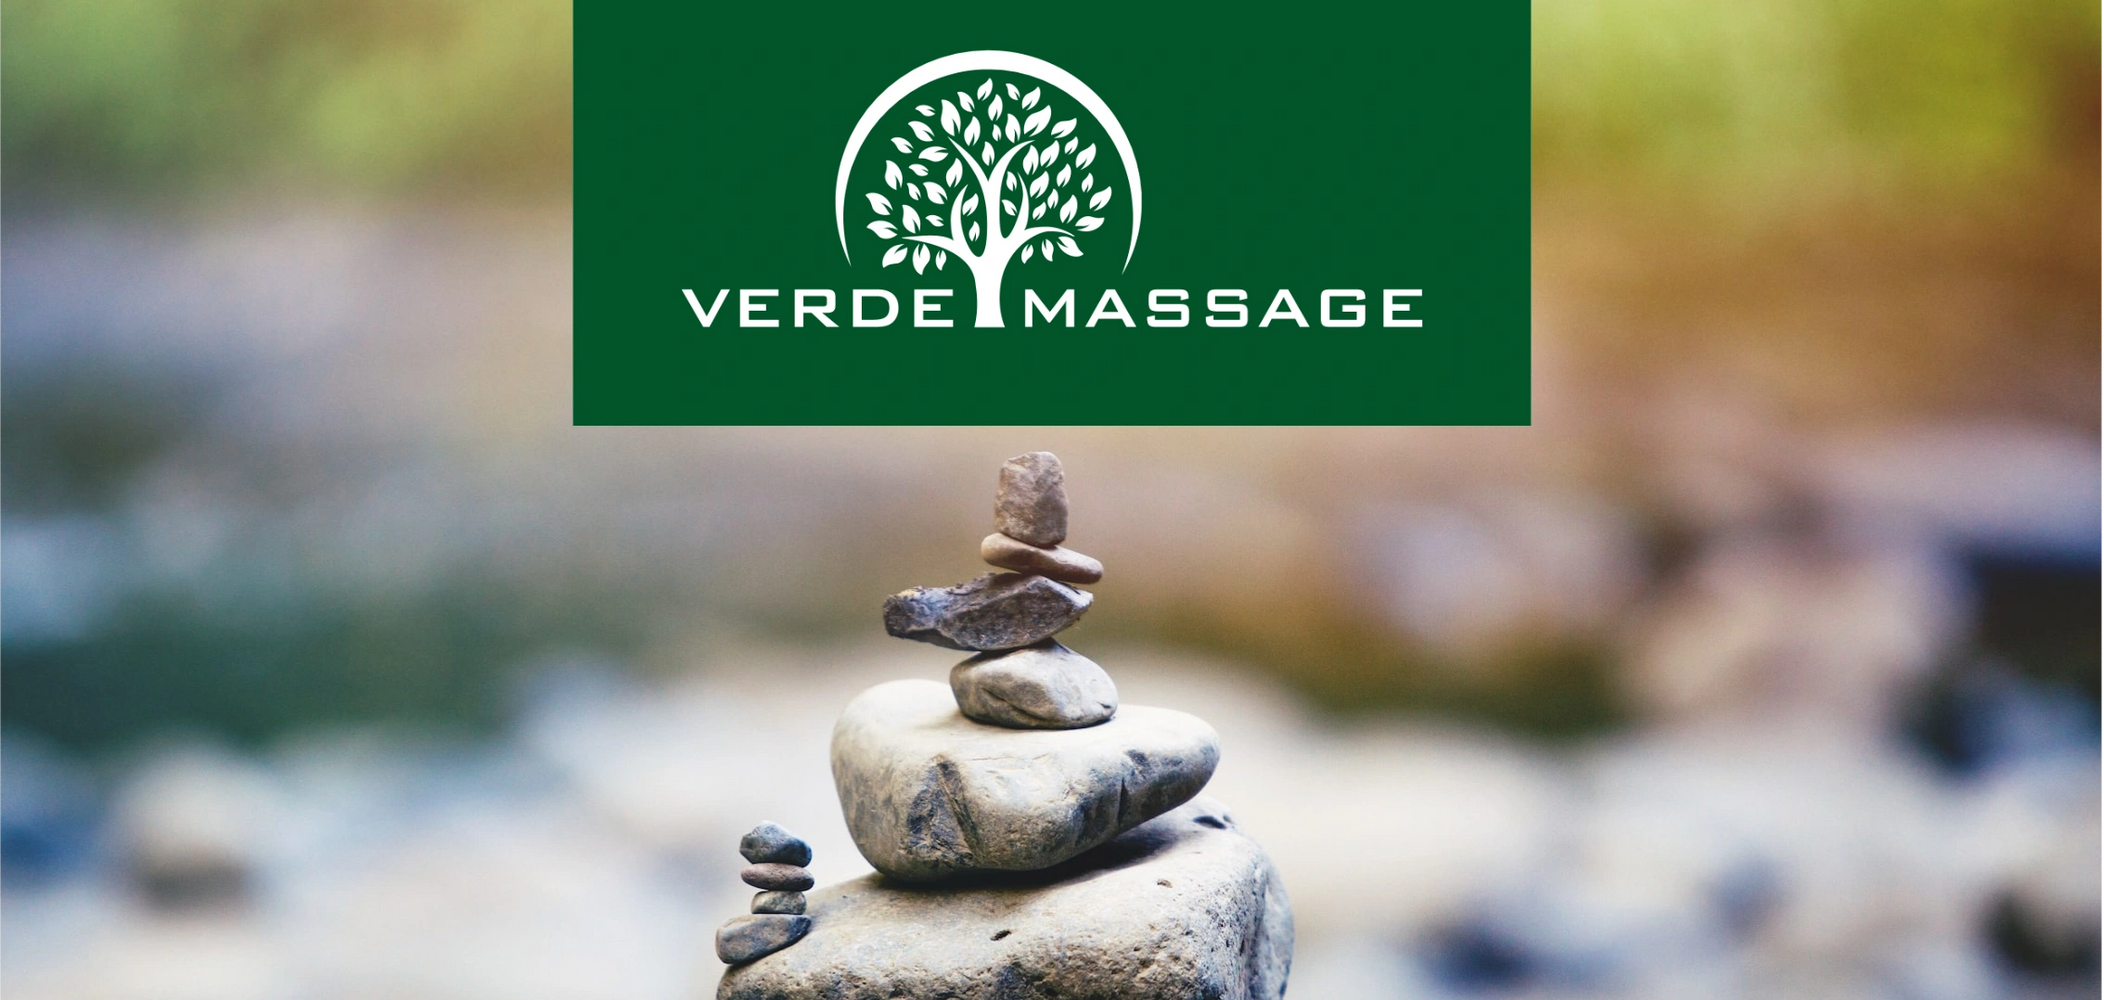 Verde Massage, Camp Verde's Advanced Massage Therapy